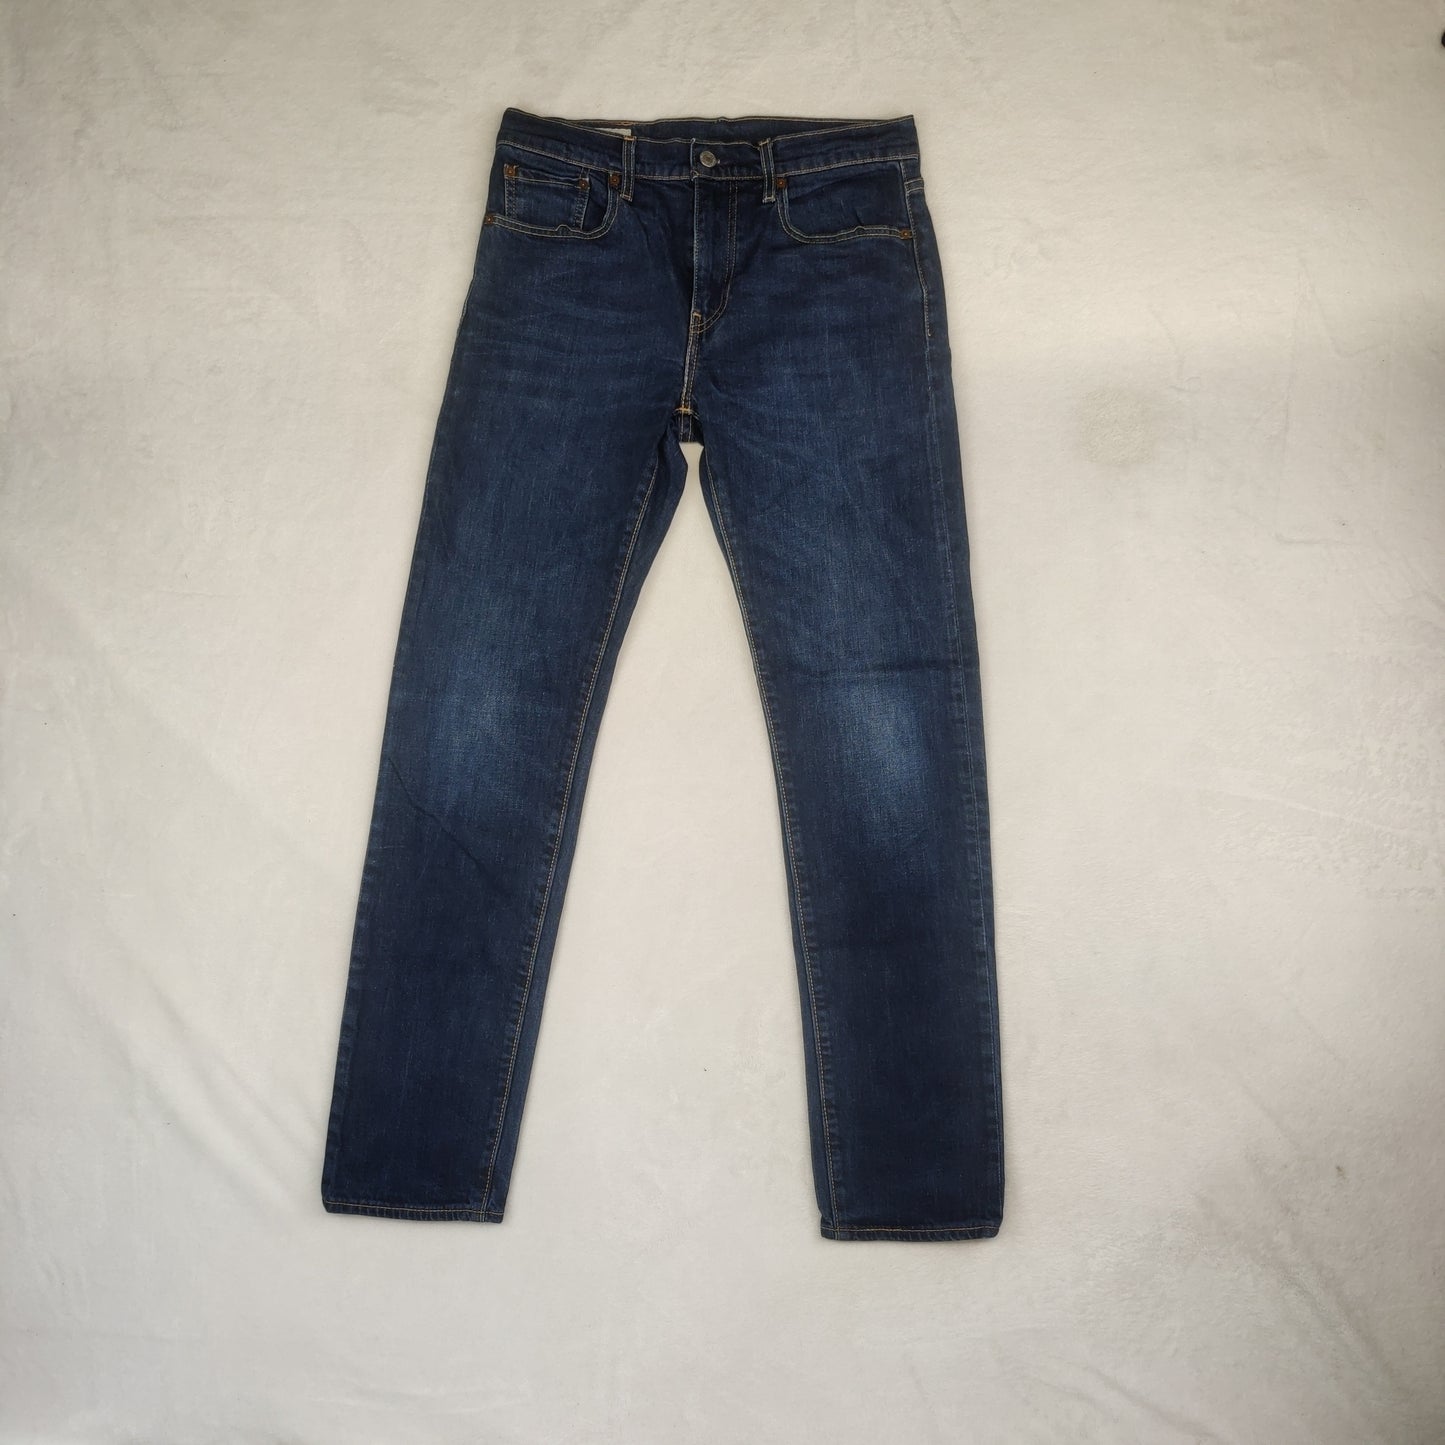 Levi's 502 Regular Tapered Dark Blue Denim Jeans Men Size W30/L32